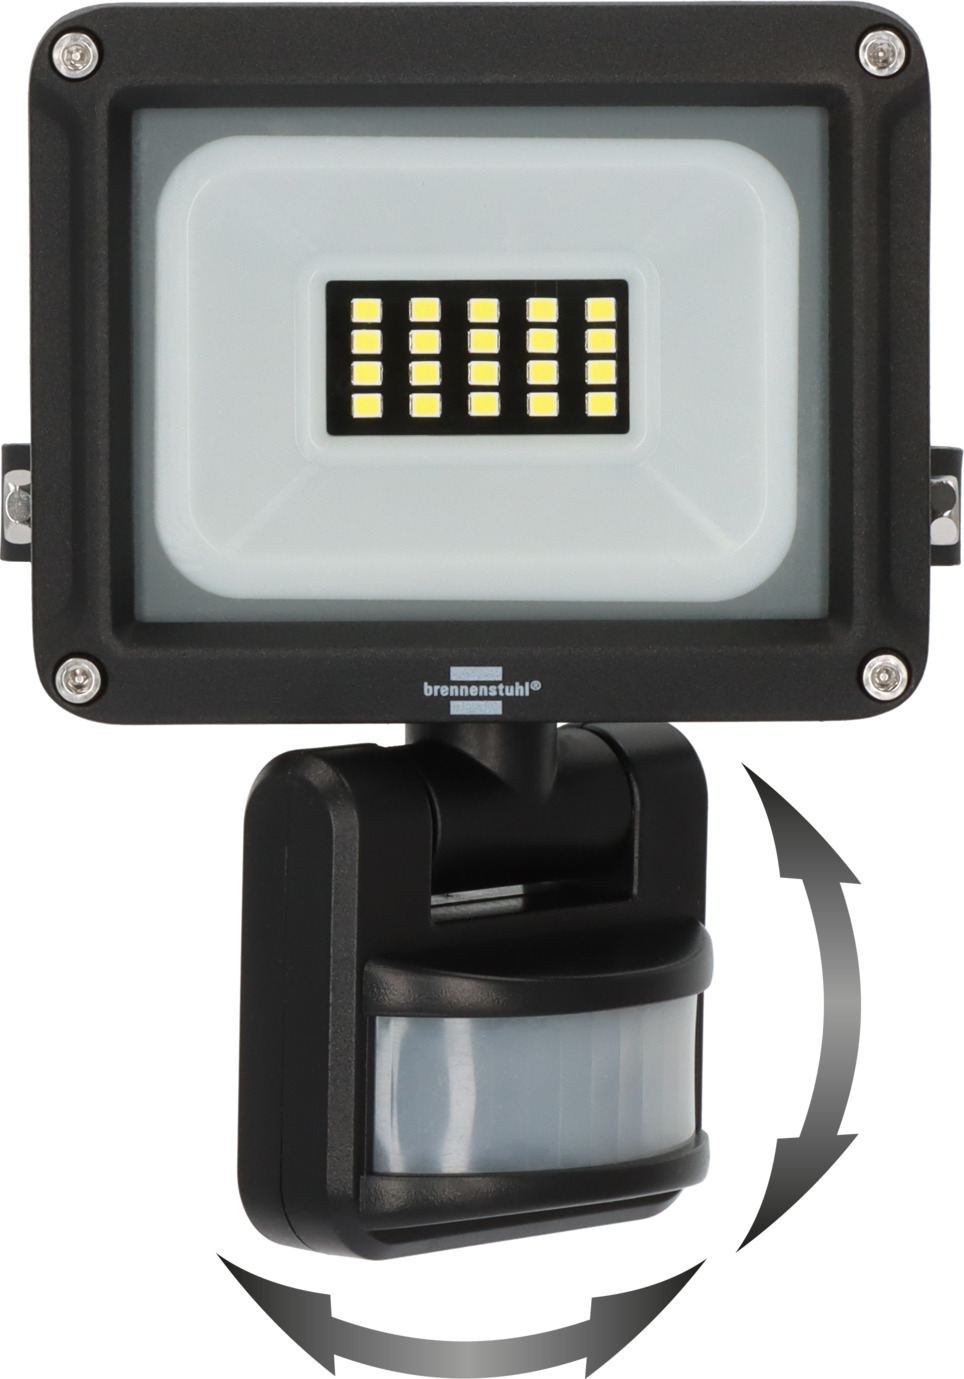 LED Strahler JARO 1060 P mit Infrarot-Bewegungsmelder, 1150lm, 10W, IP65 |  brennenstuhl® | Wandstrahler